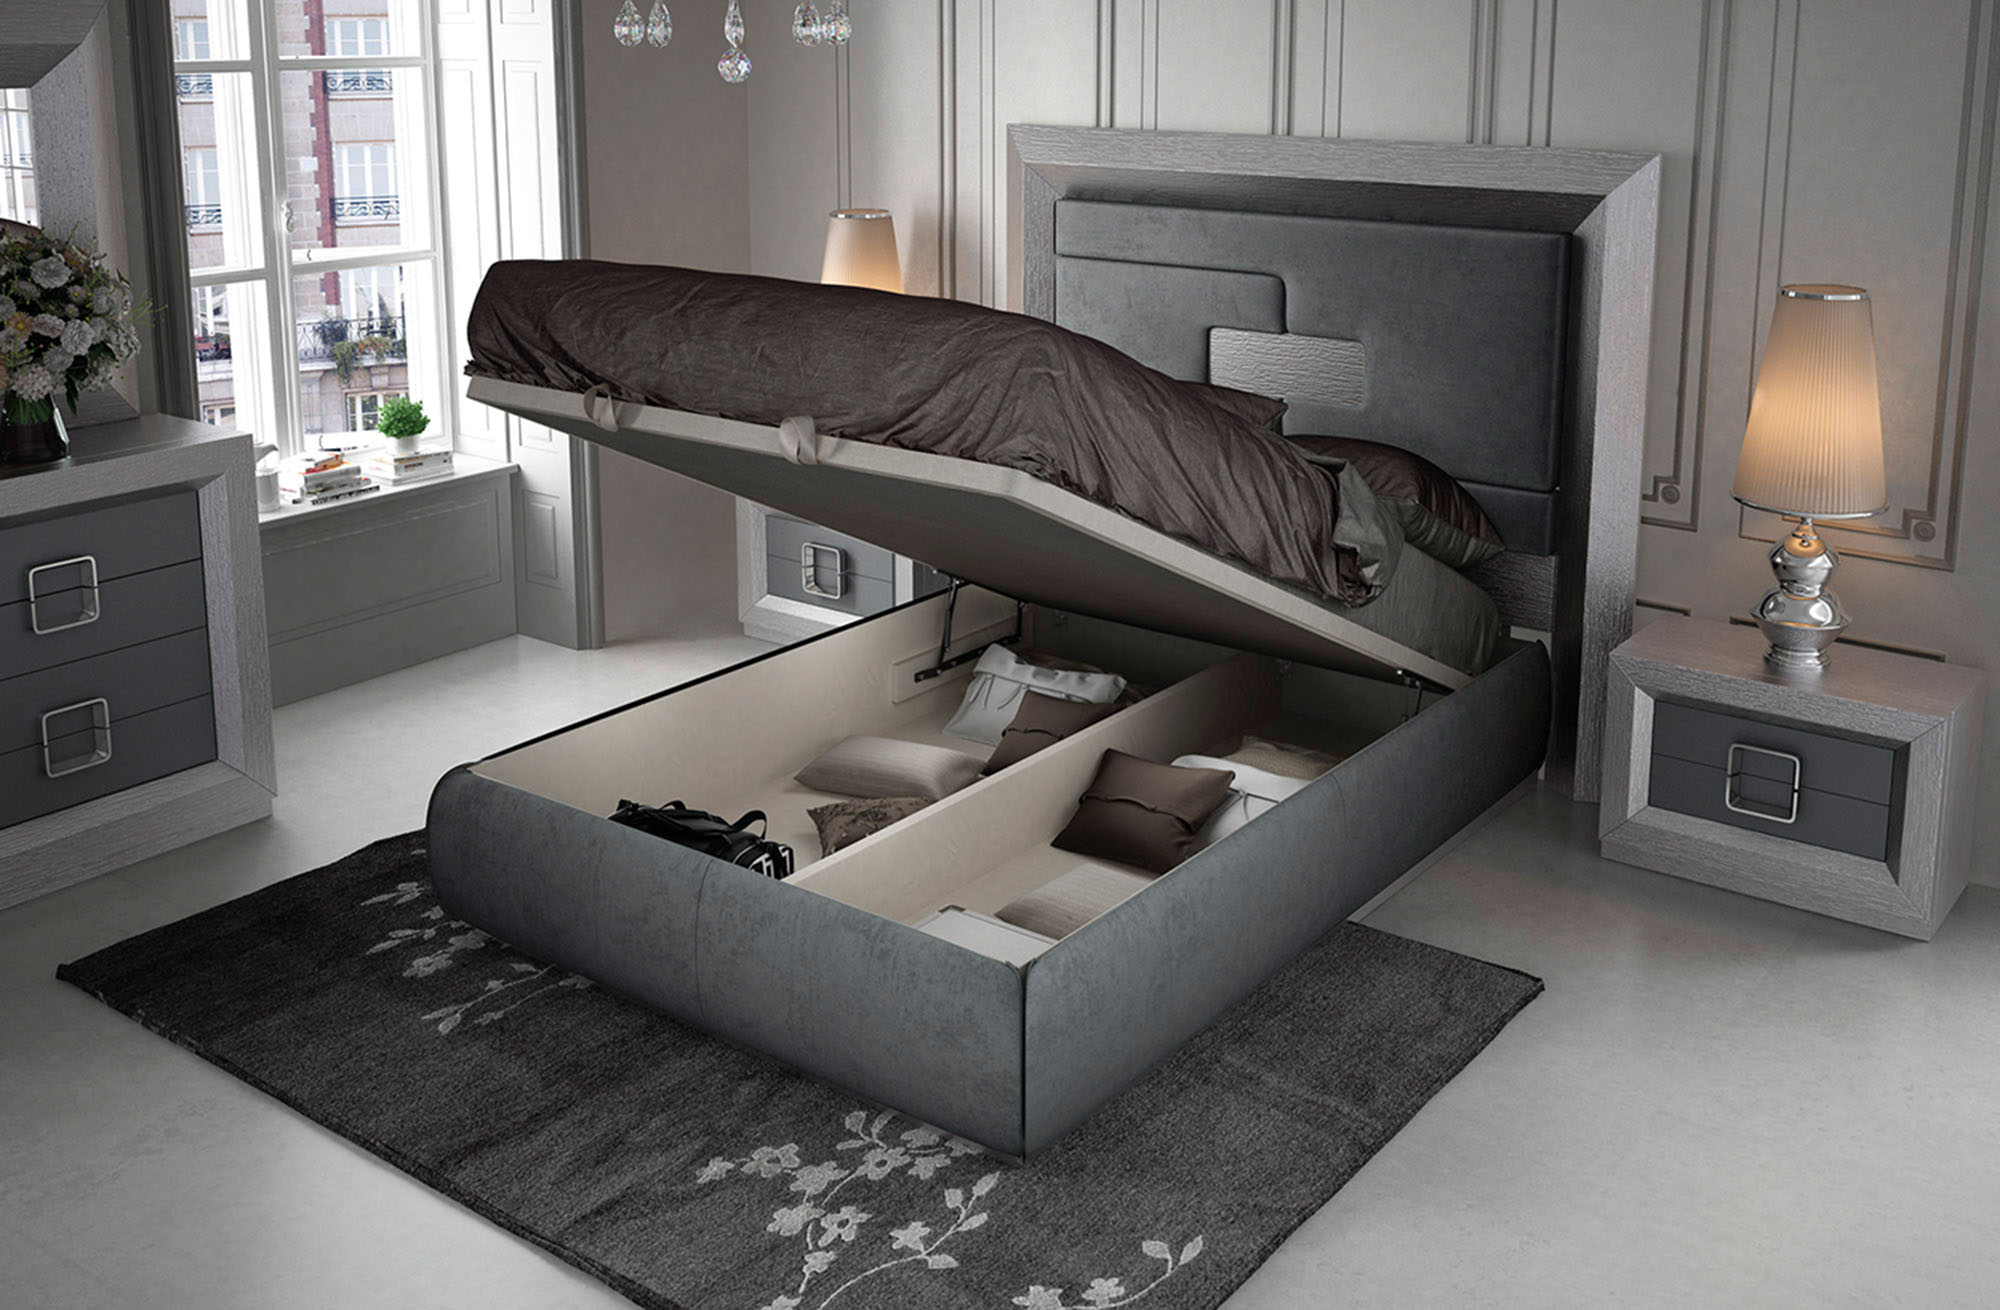 pics of modern bedroom furniture